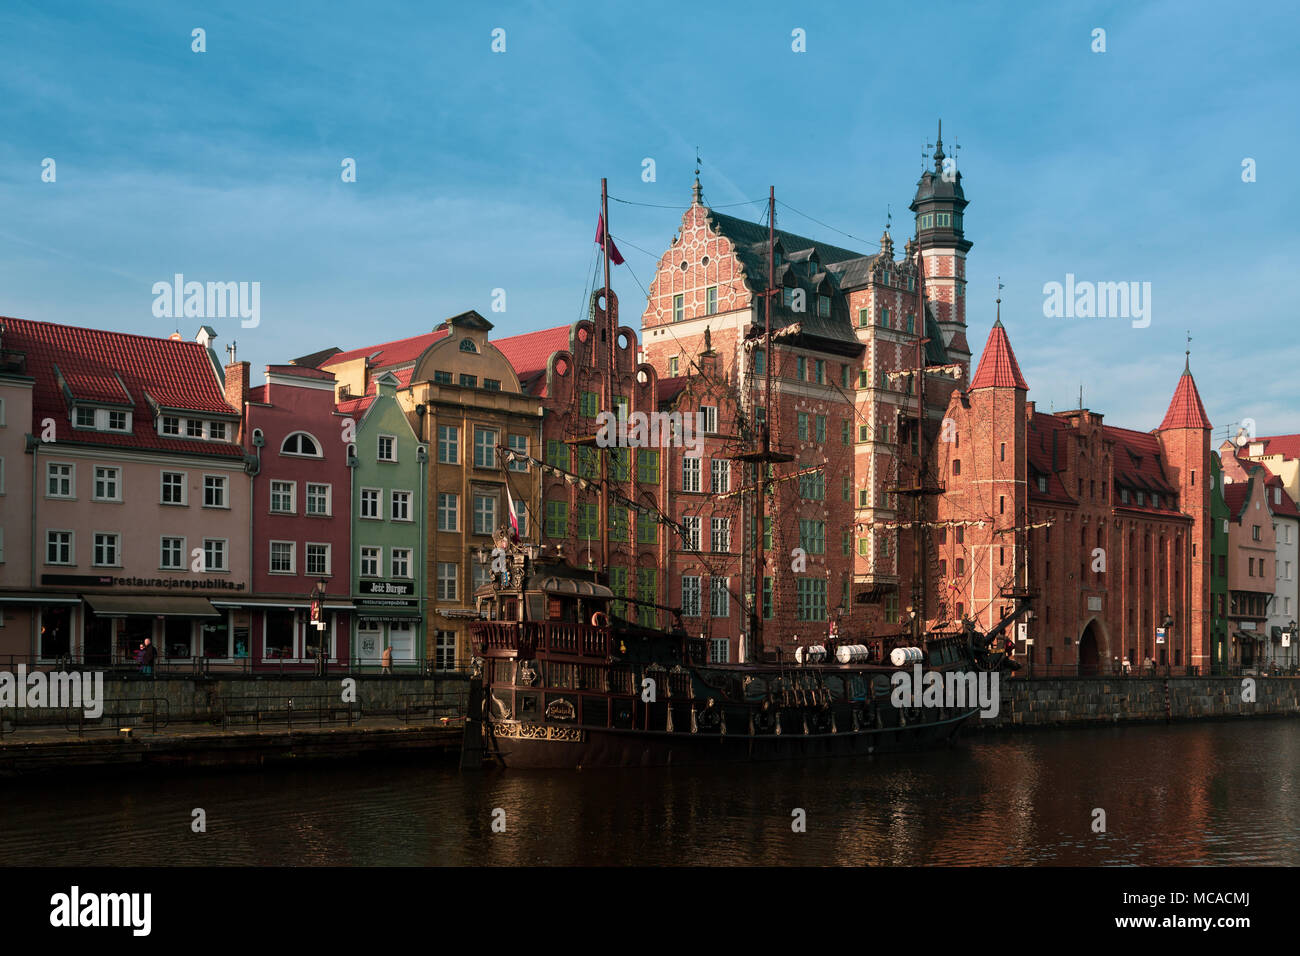 Gdansk (Danzig) along the Motlawa River, Poland Stock Photo